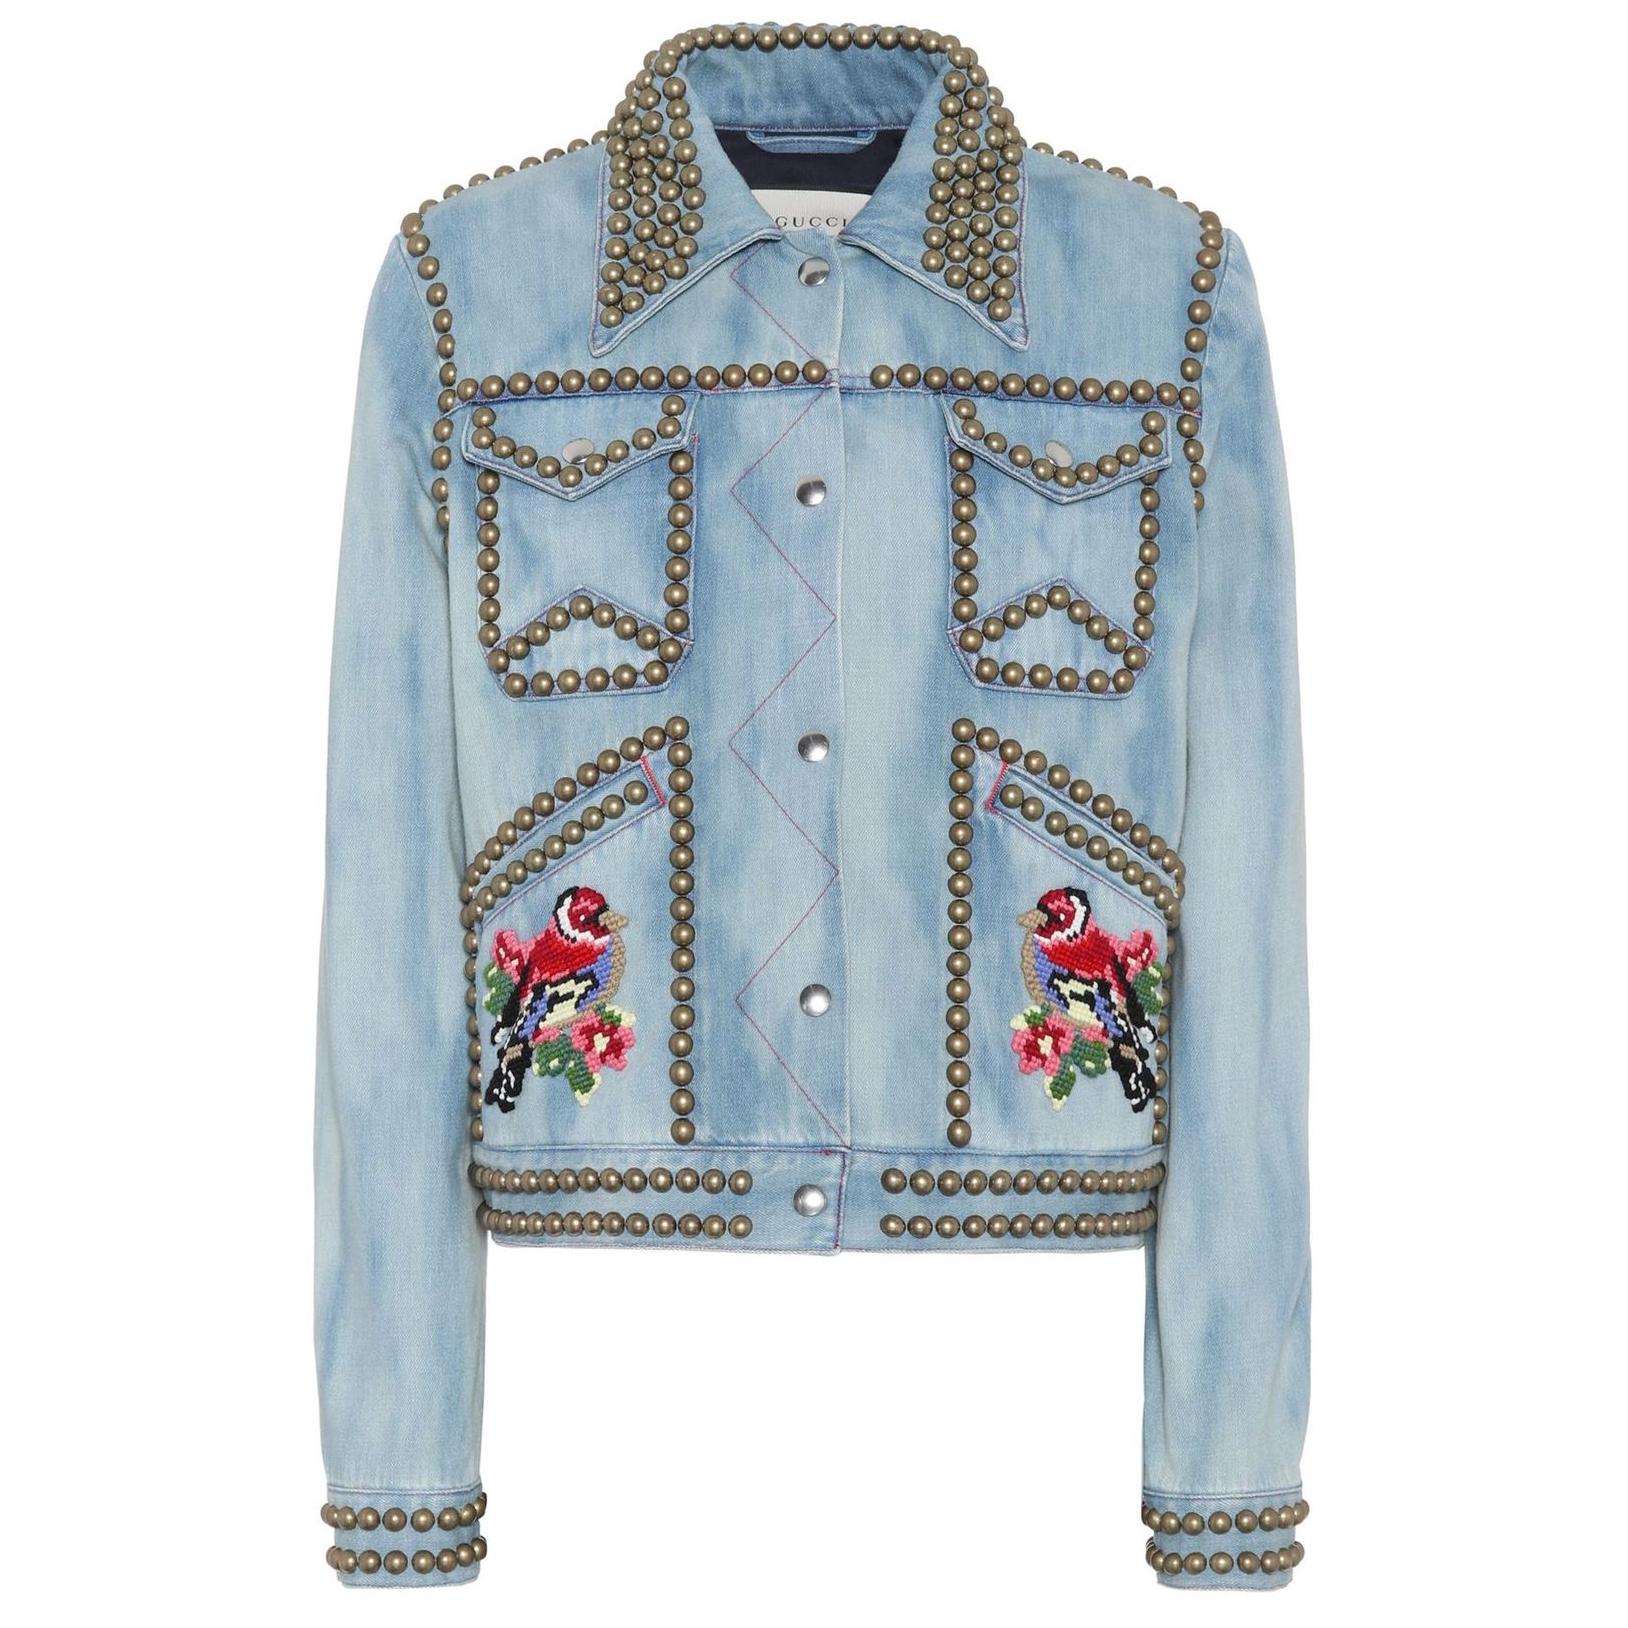 Gucci Embroidered Studded Denim Jacket